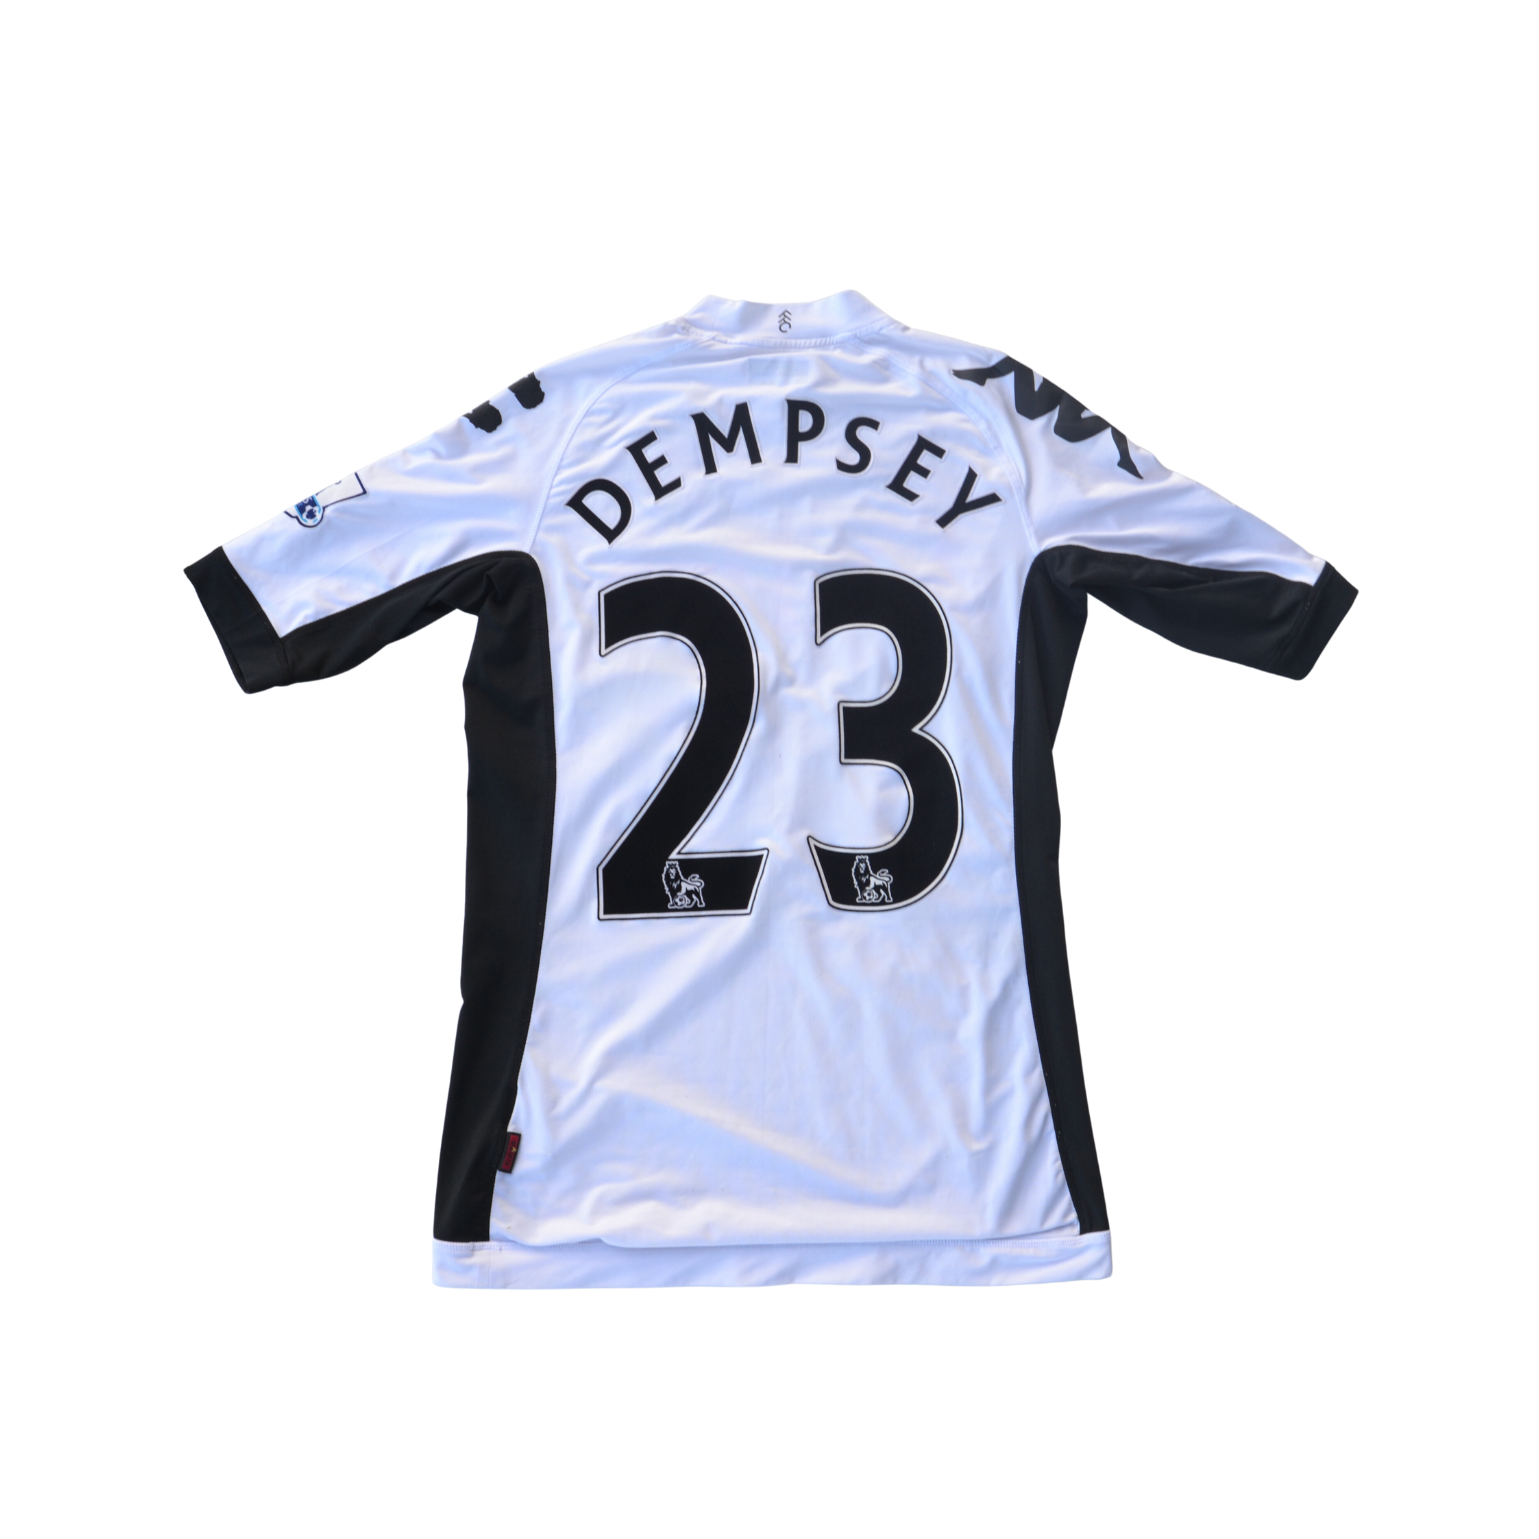 Fulham FC - Dempsey Returns